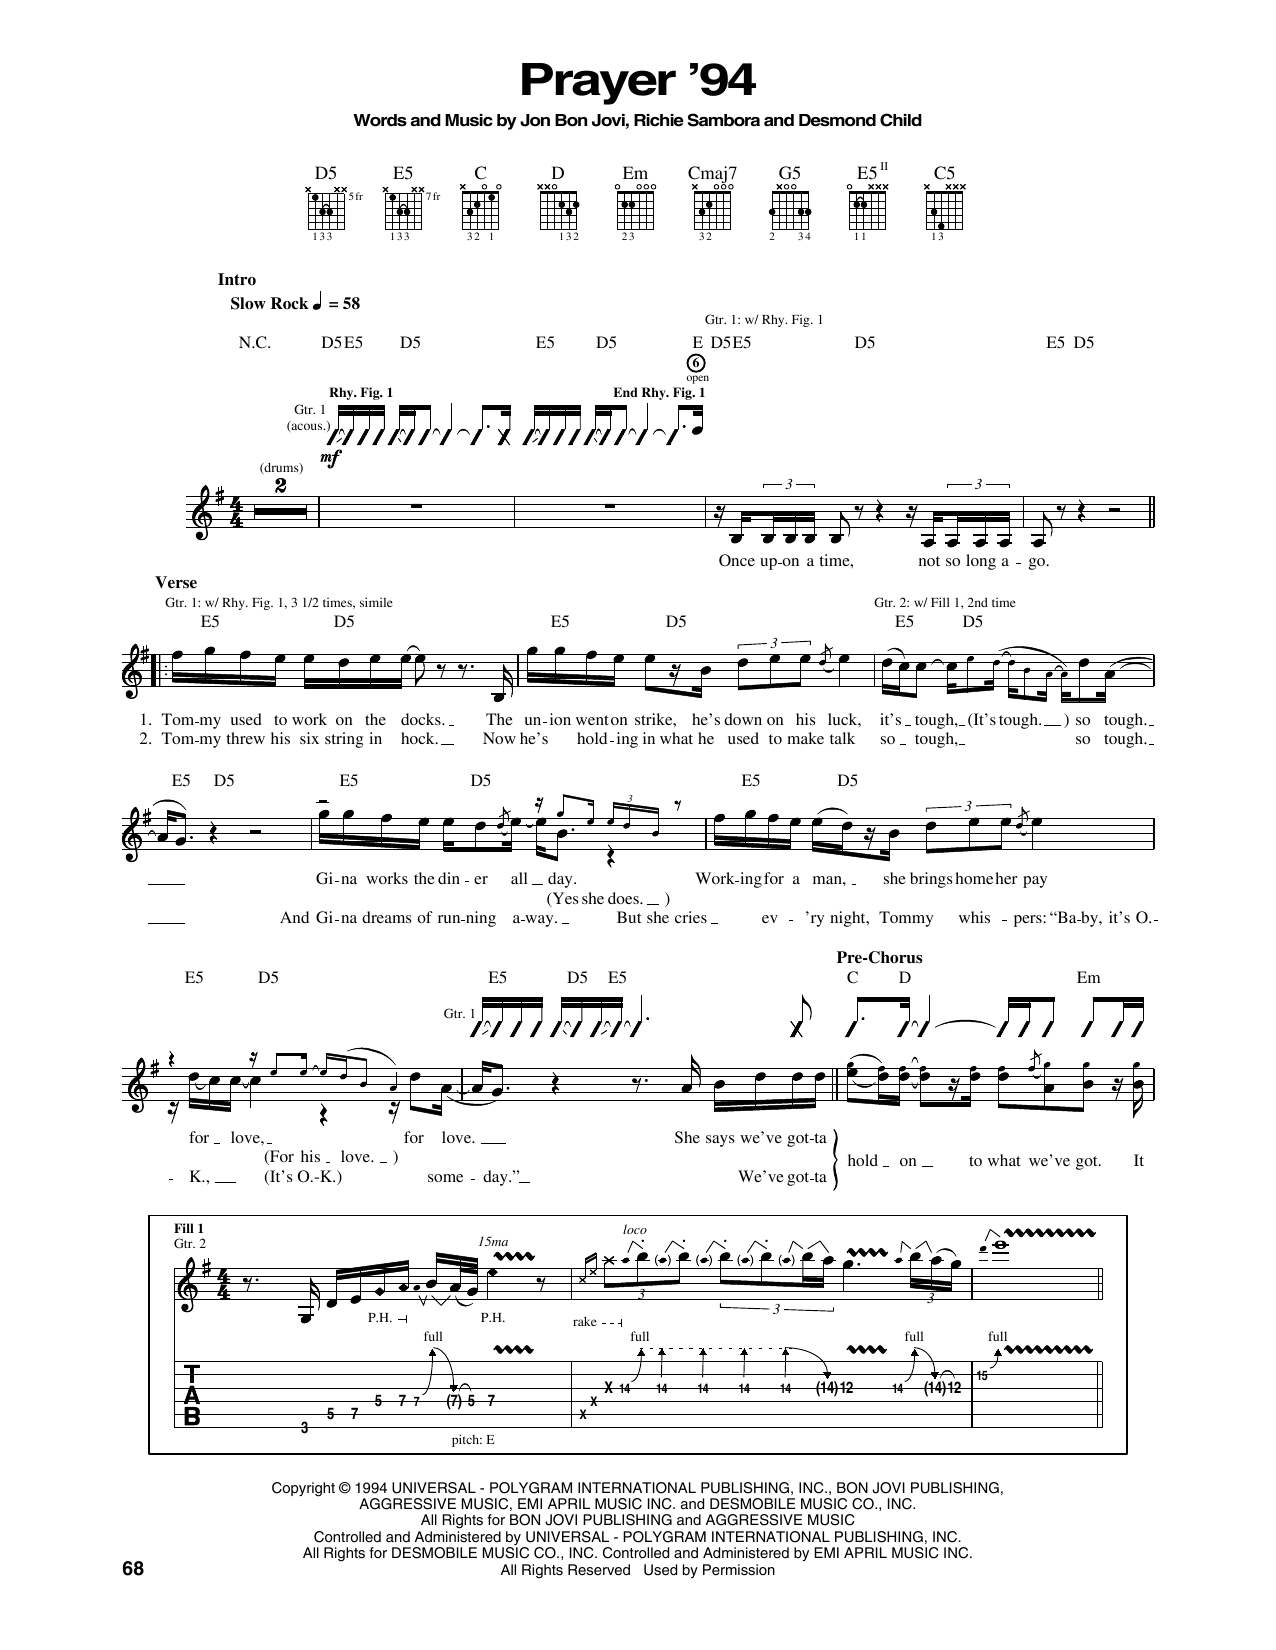 Bon Jovi Prayer '94 Sheet Music Notes & Chords for Piano, Vocal & Guitar Chords (Right-Hand Melody) - Download or Print PDF